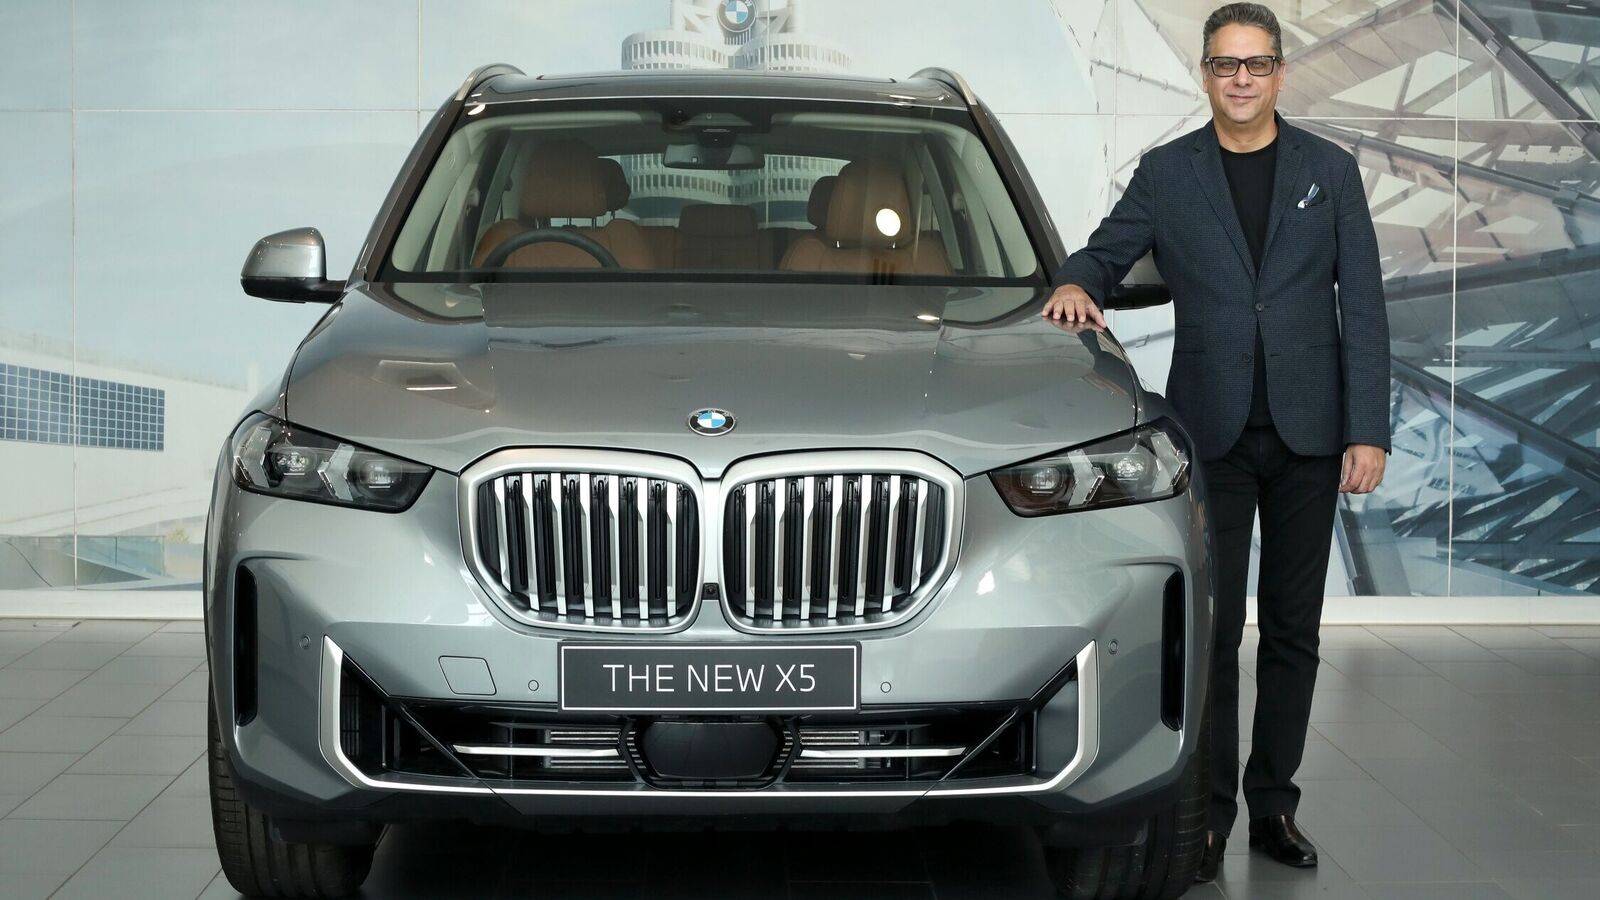 BMW launches X5 xDrive 30d M Sport at ₹97.9 lakh - Car News